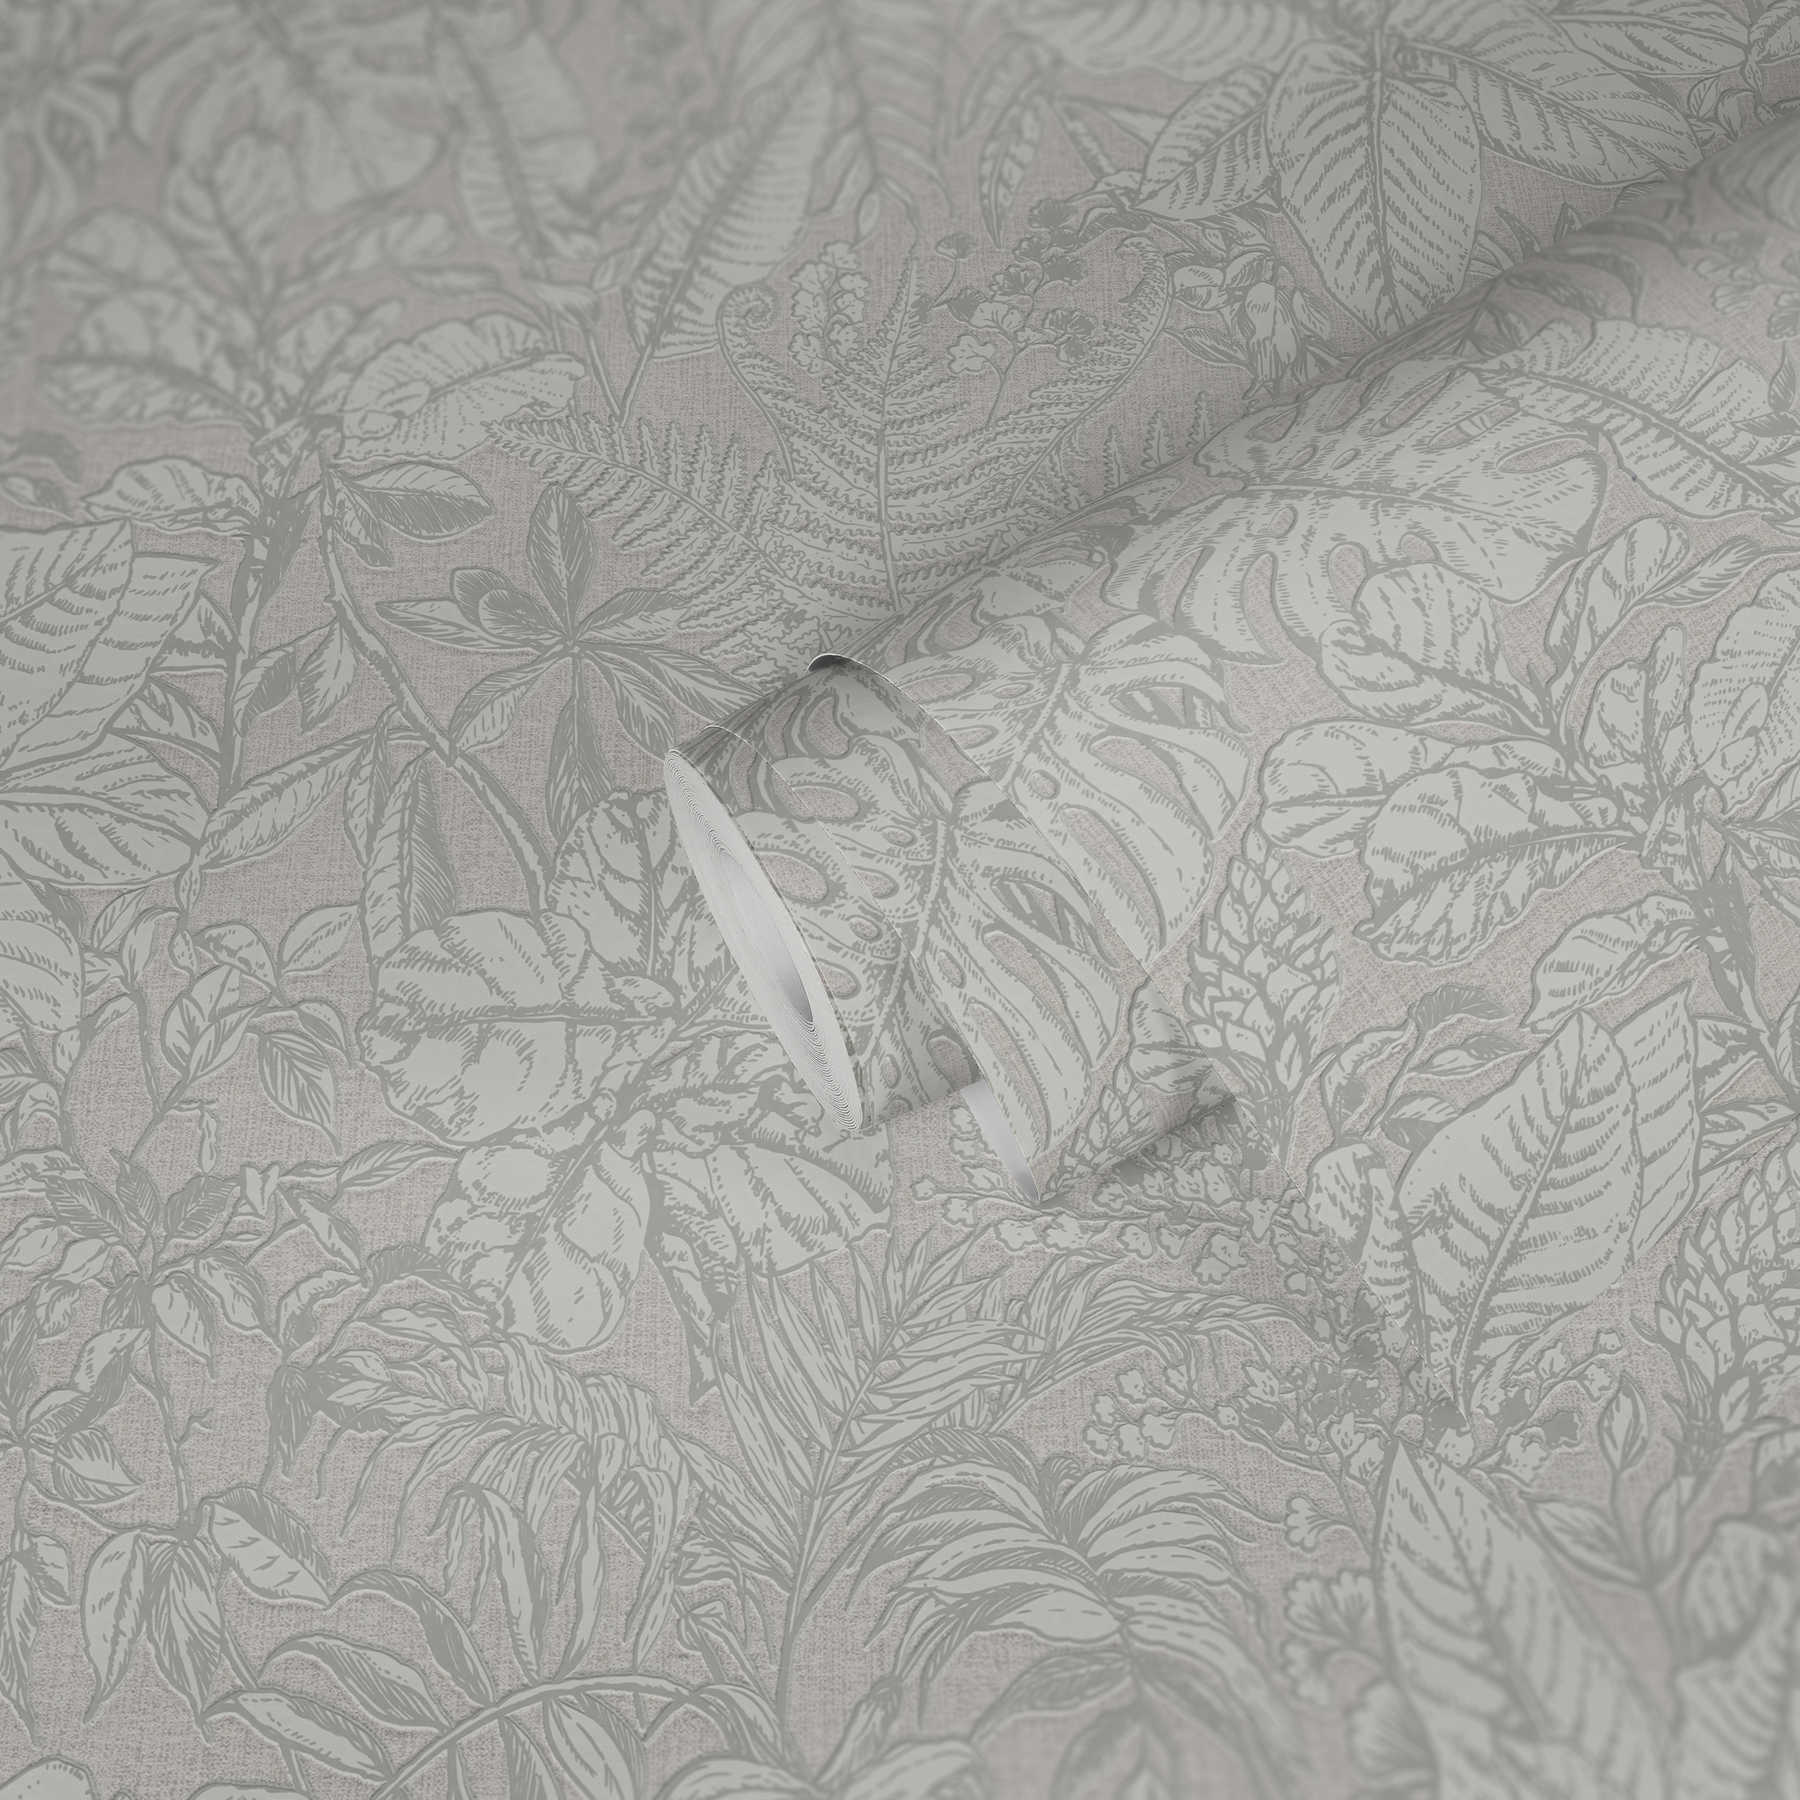             Jungle wallpaper, monstera leaves & ferns - grey, white
        